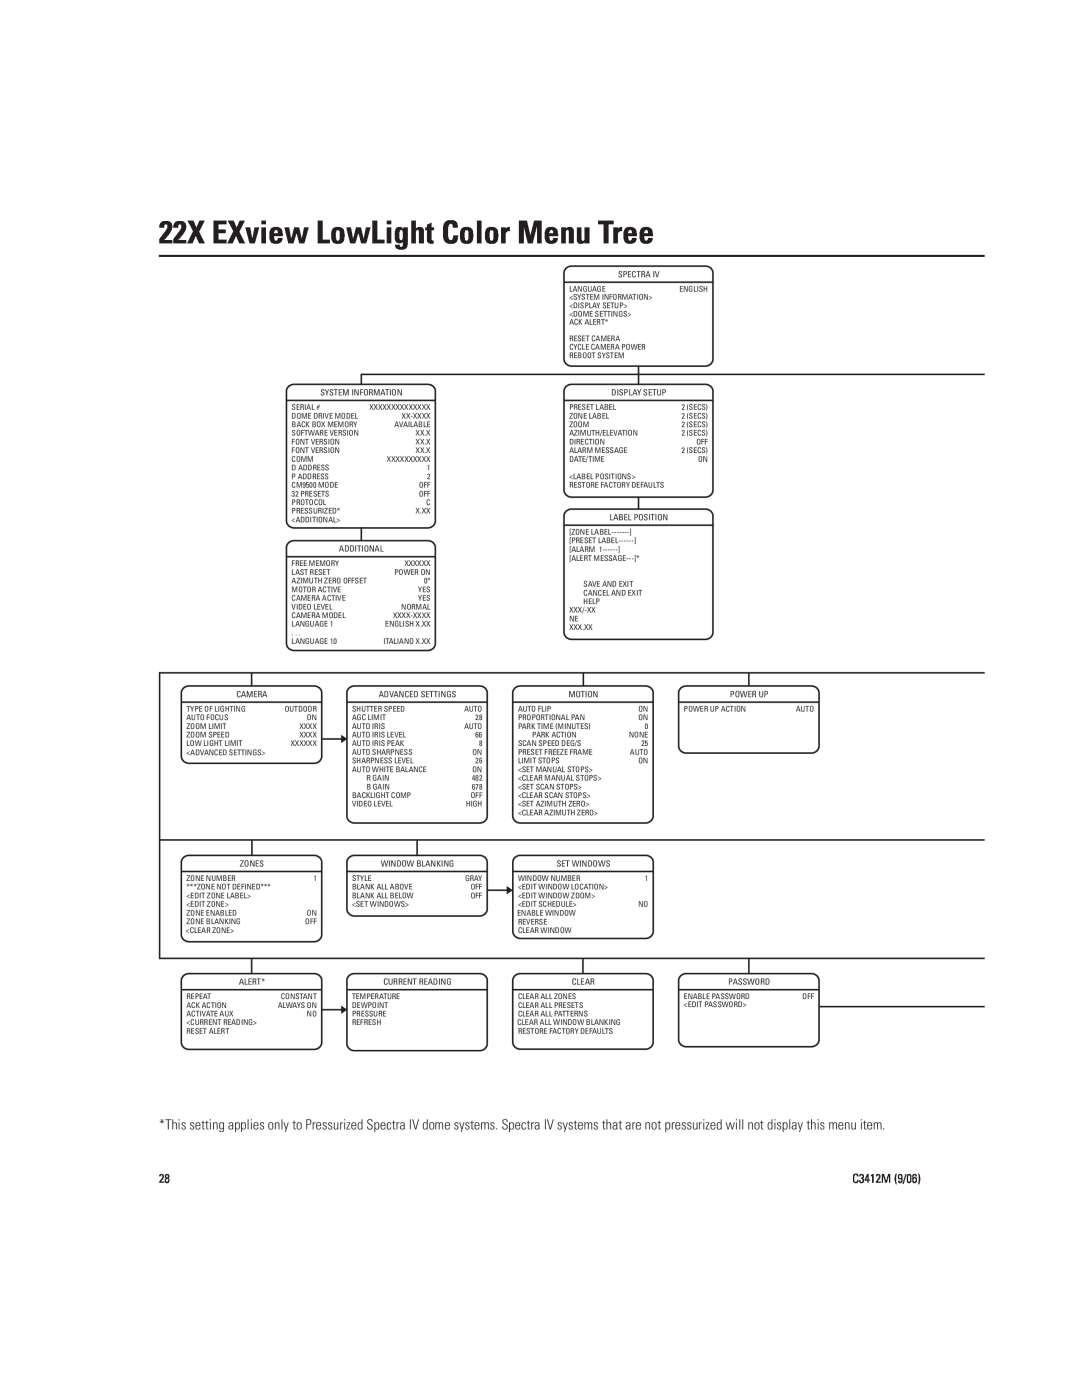 Pelco IV SE manual 22X EXview LowLight Color Menu Tree, C3412M 9/06 